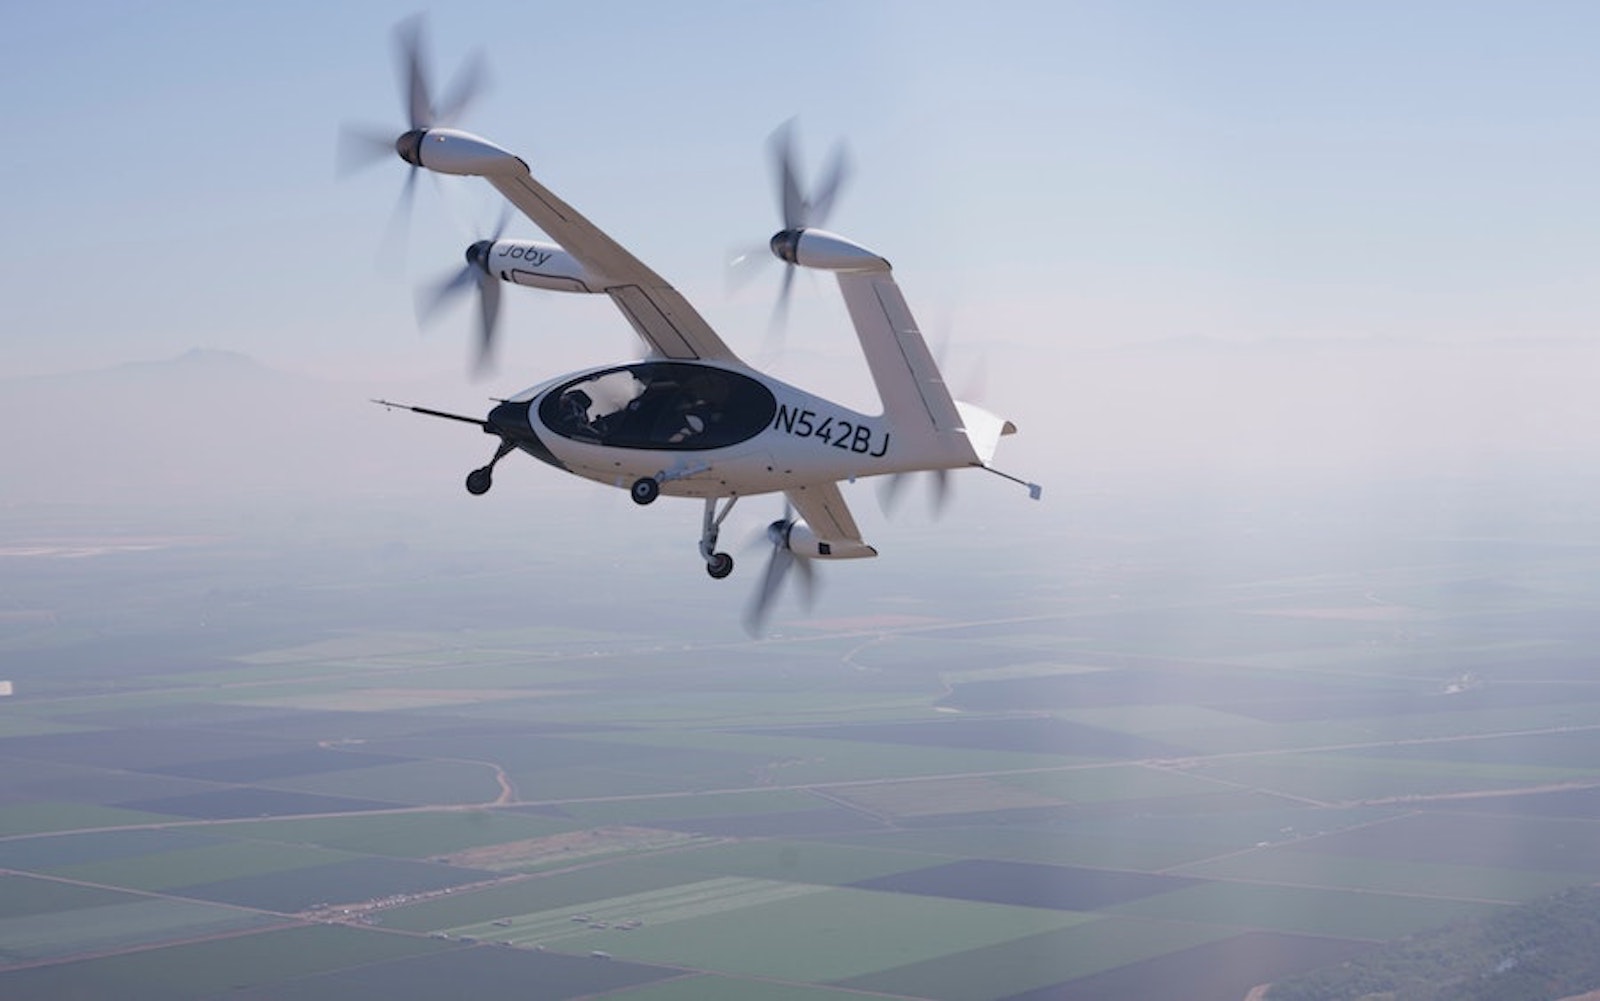 Joby eVTOL flying in air 2022